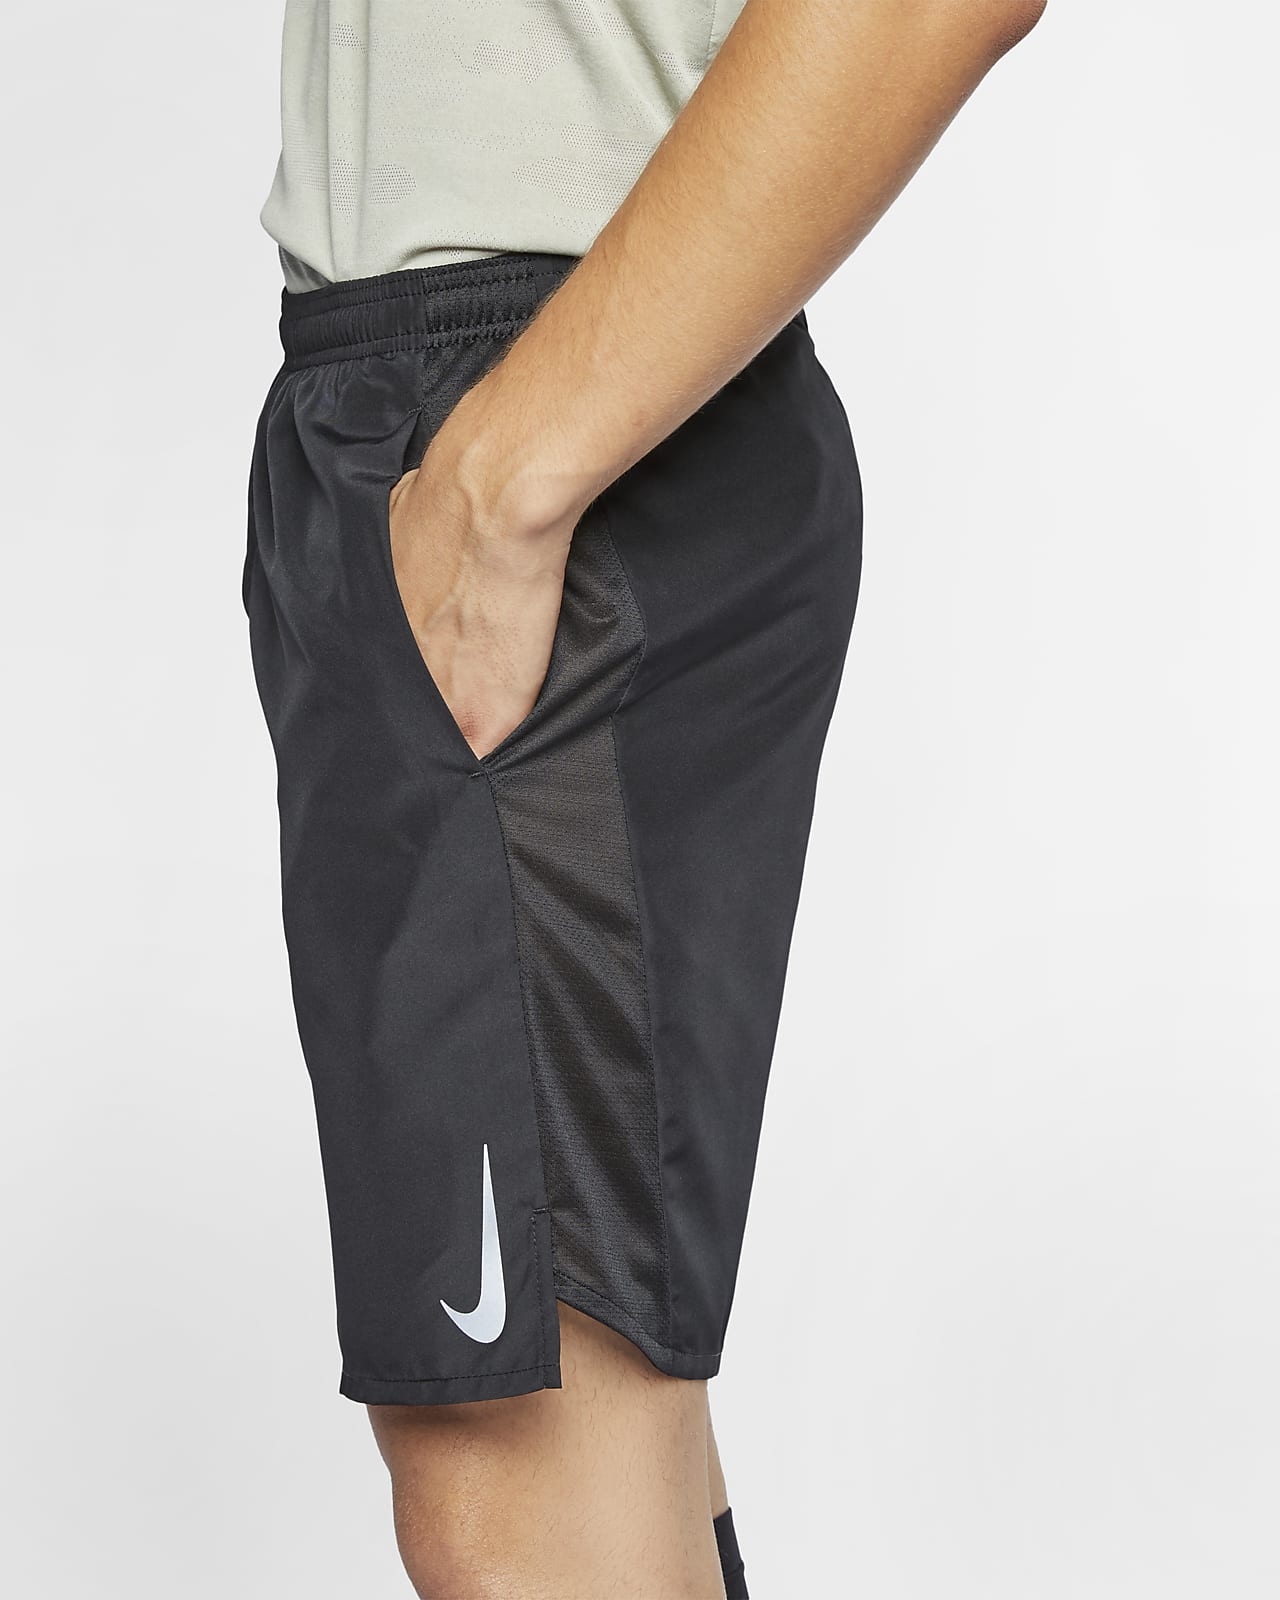 Brief-Lined Running Shorts. Nike LU